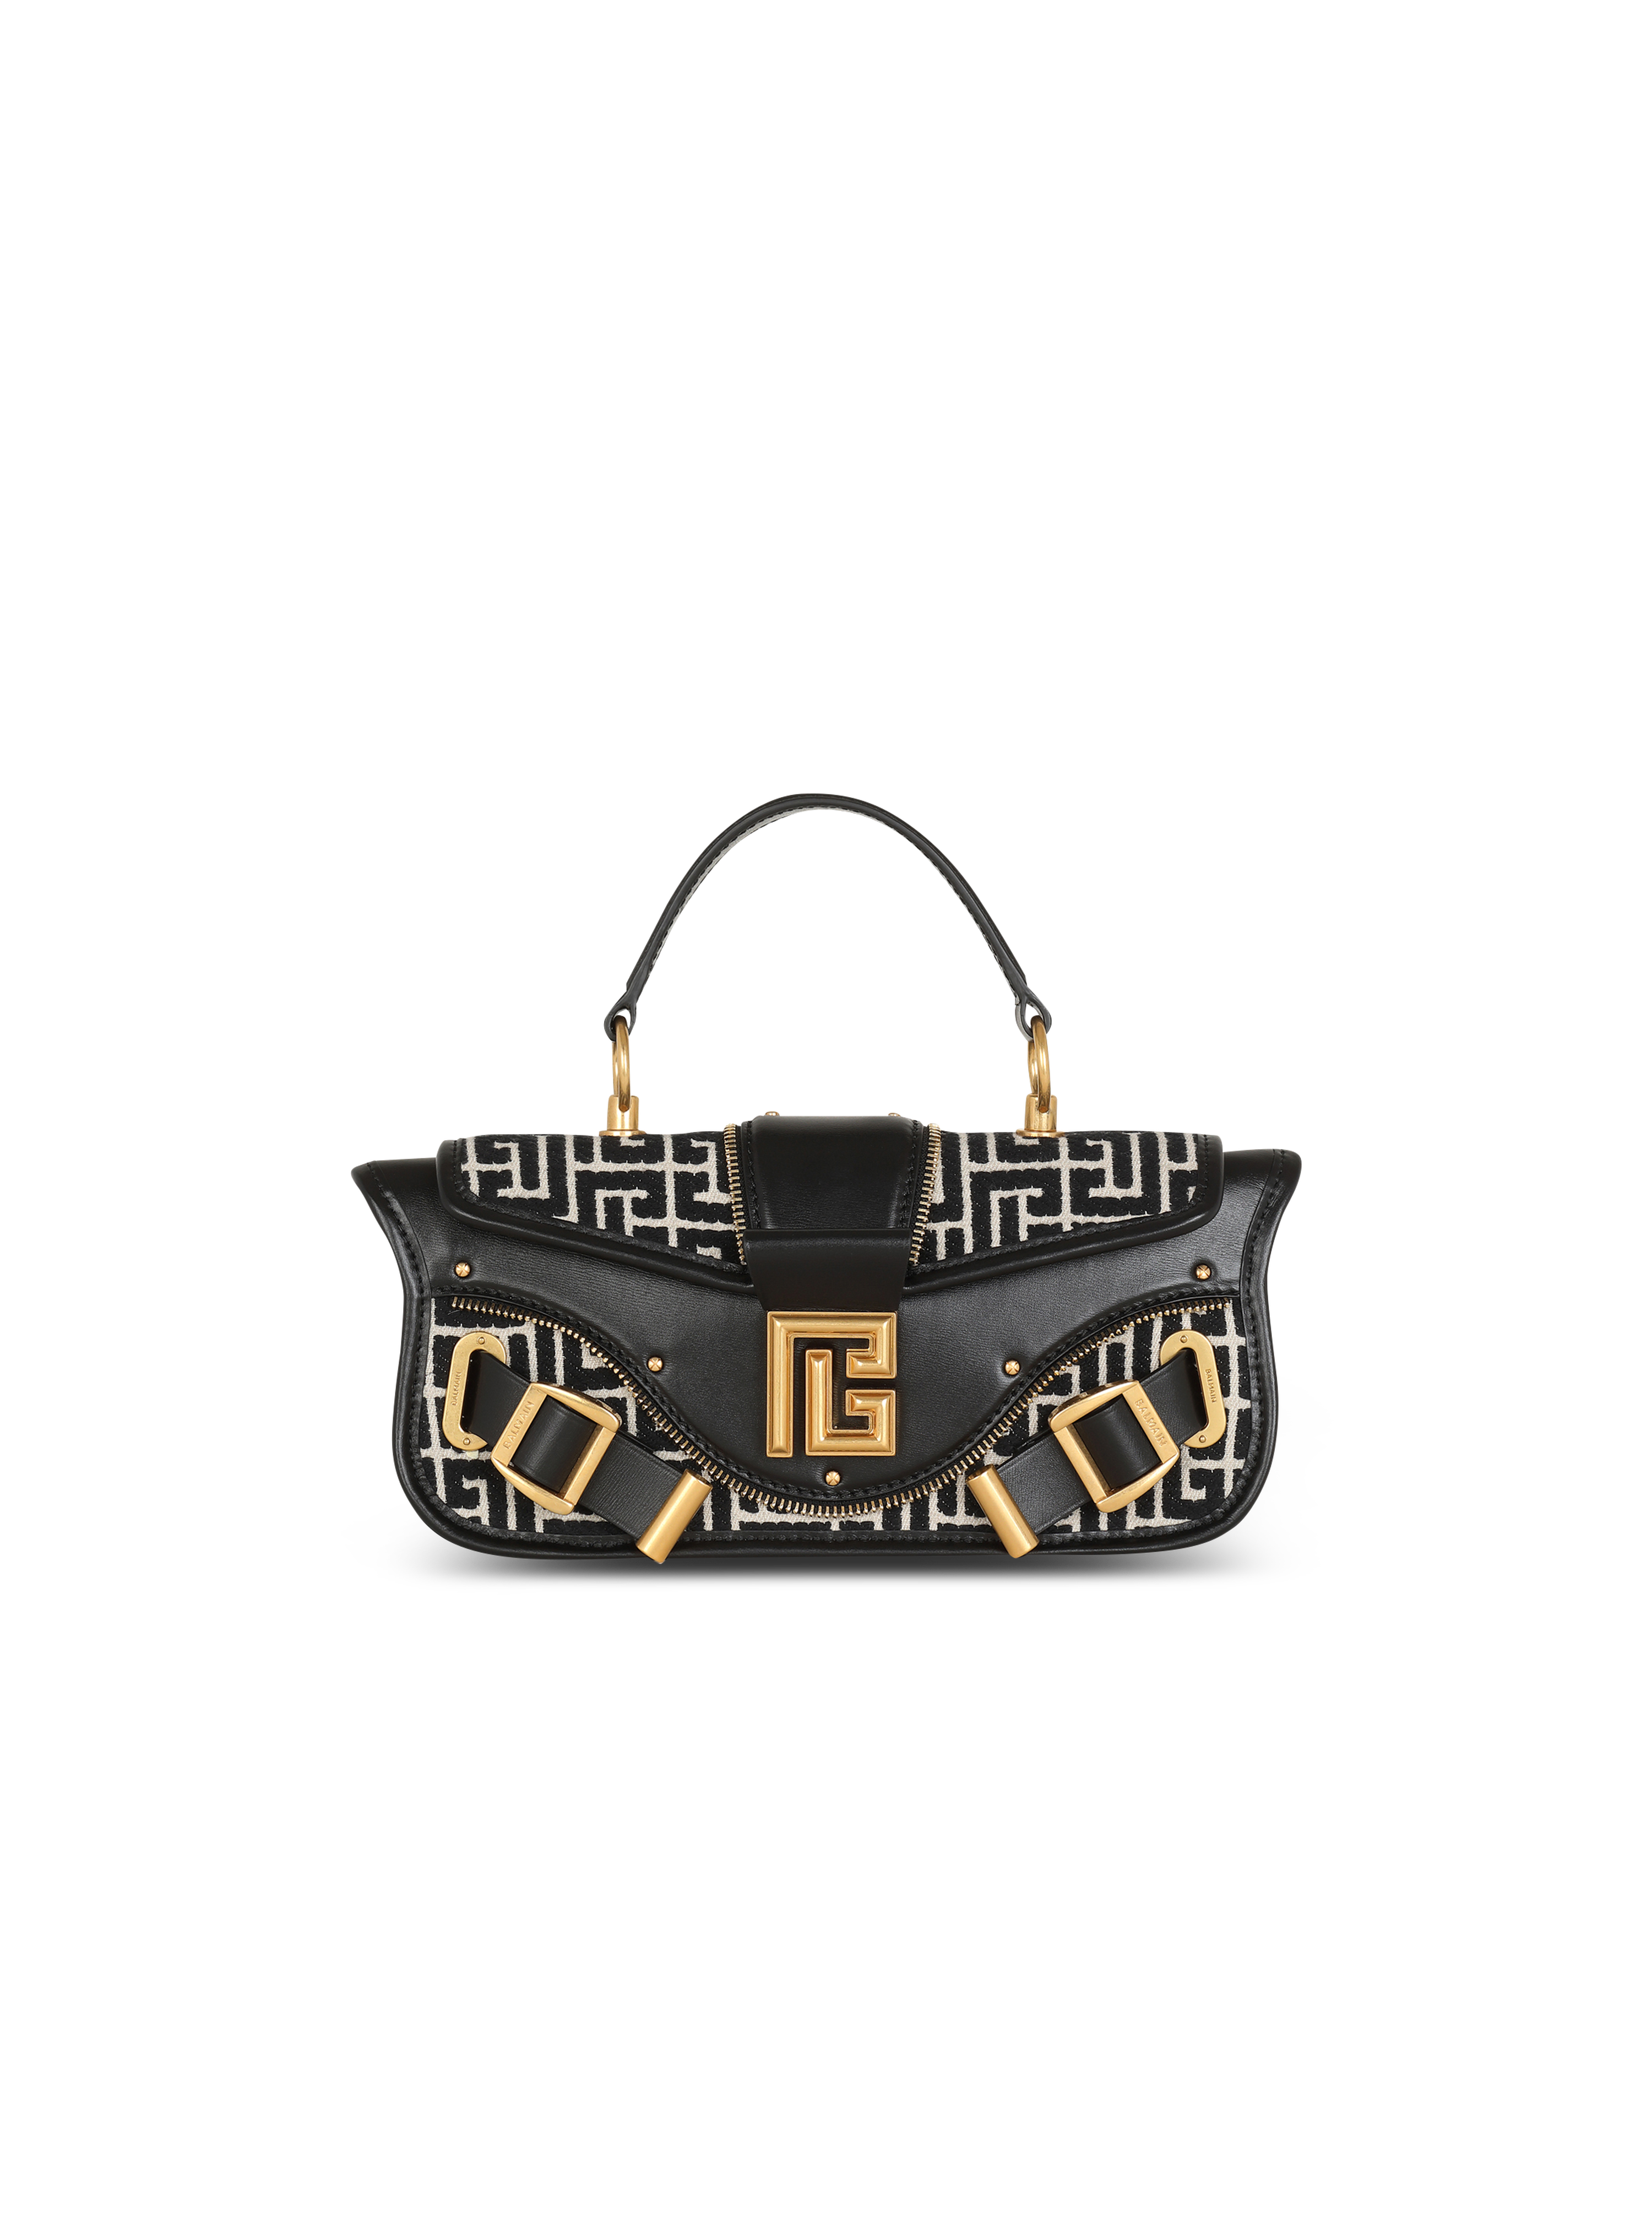 Blaze leather clutch bag with jacquard monogram, black